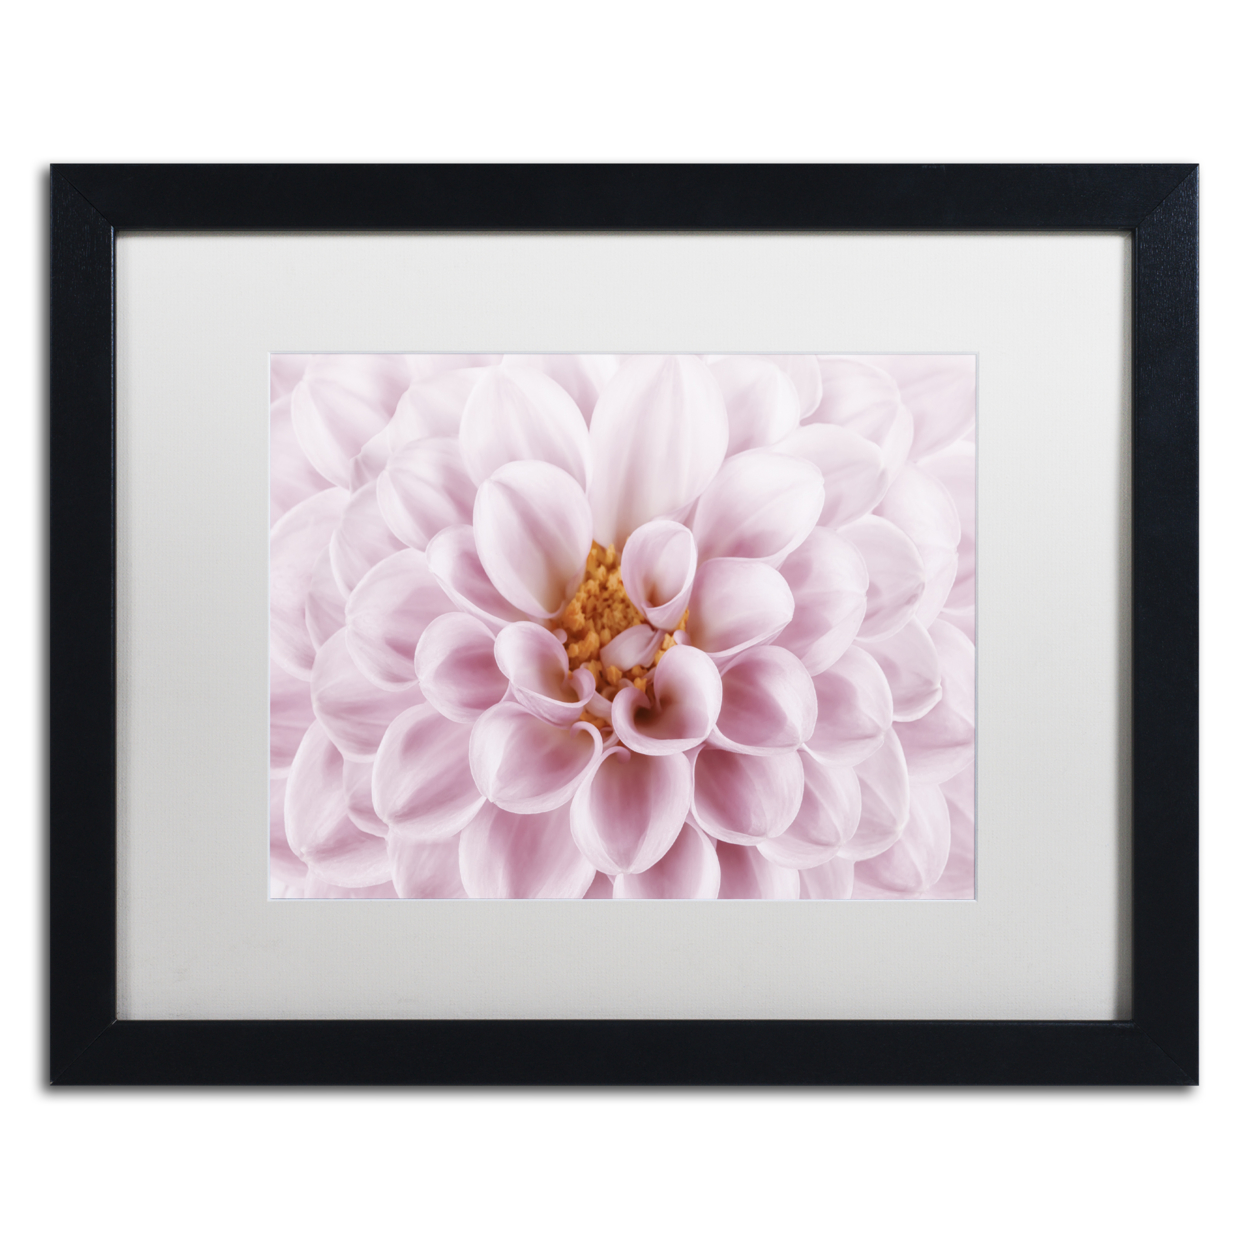 Cora Niele 'Pink Dahlia' Black Wooden Framed Art 18 X 22 Inches